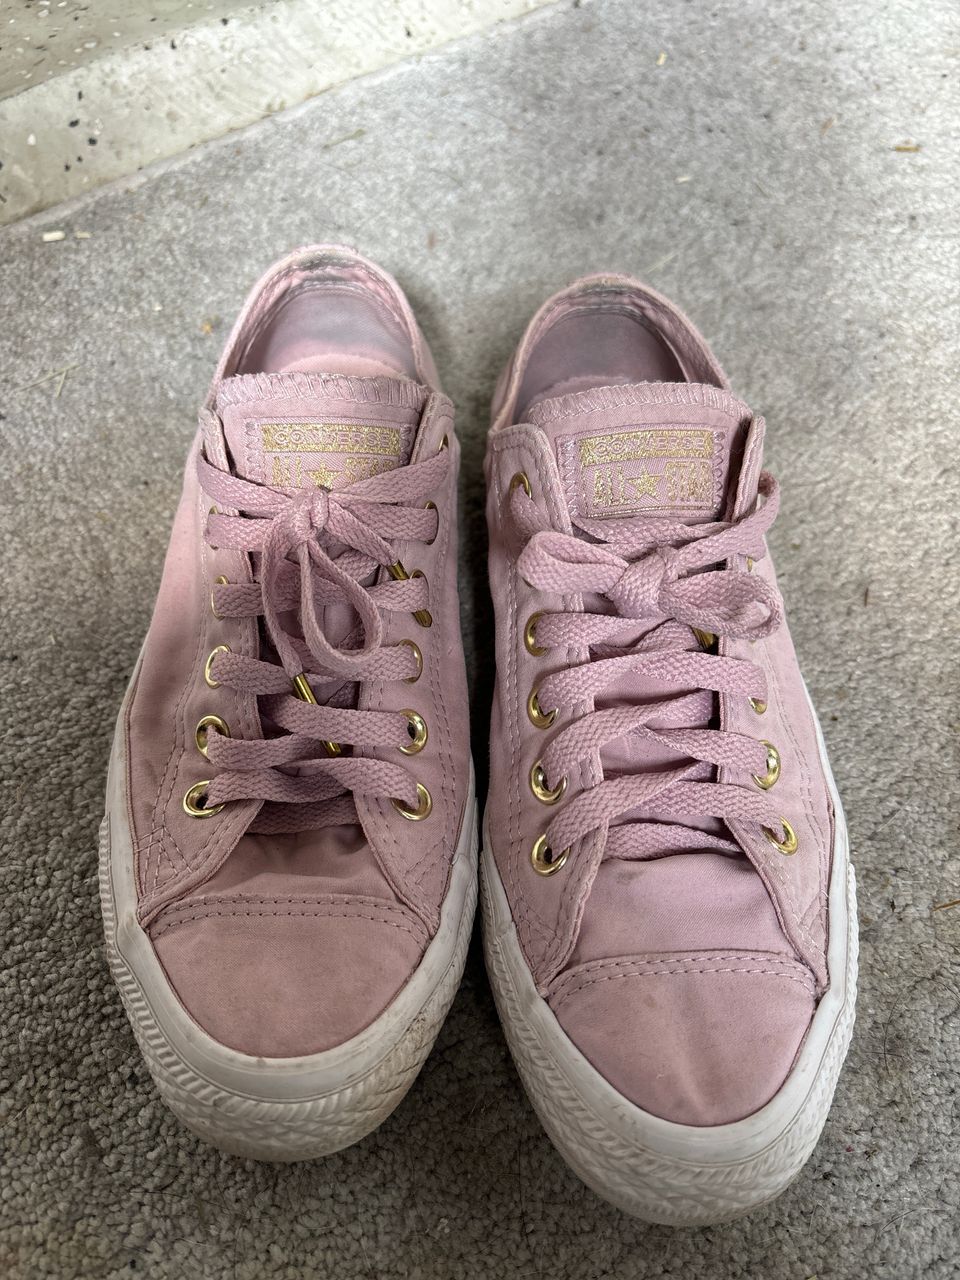 Converse vaaleanpunaiset kengät 37.5